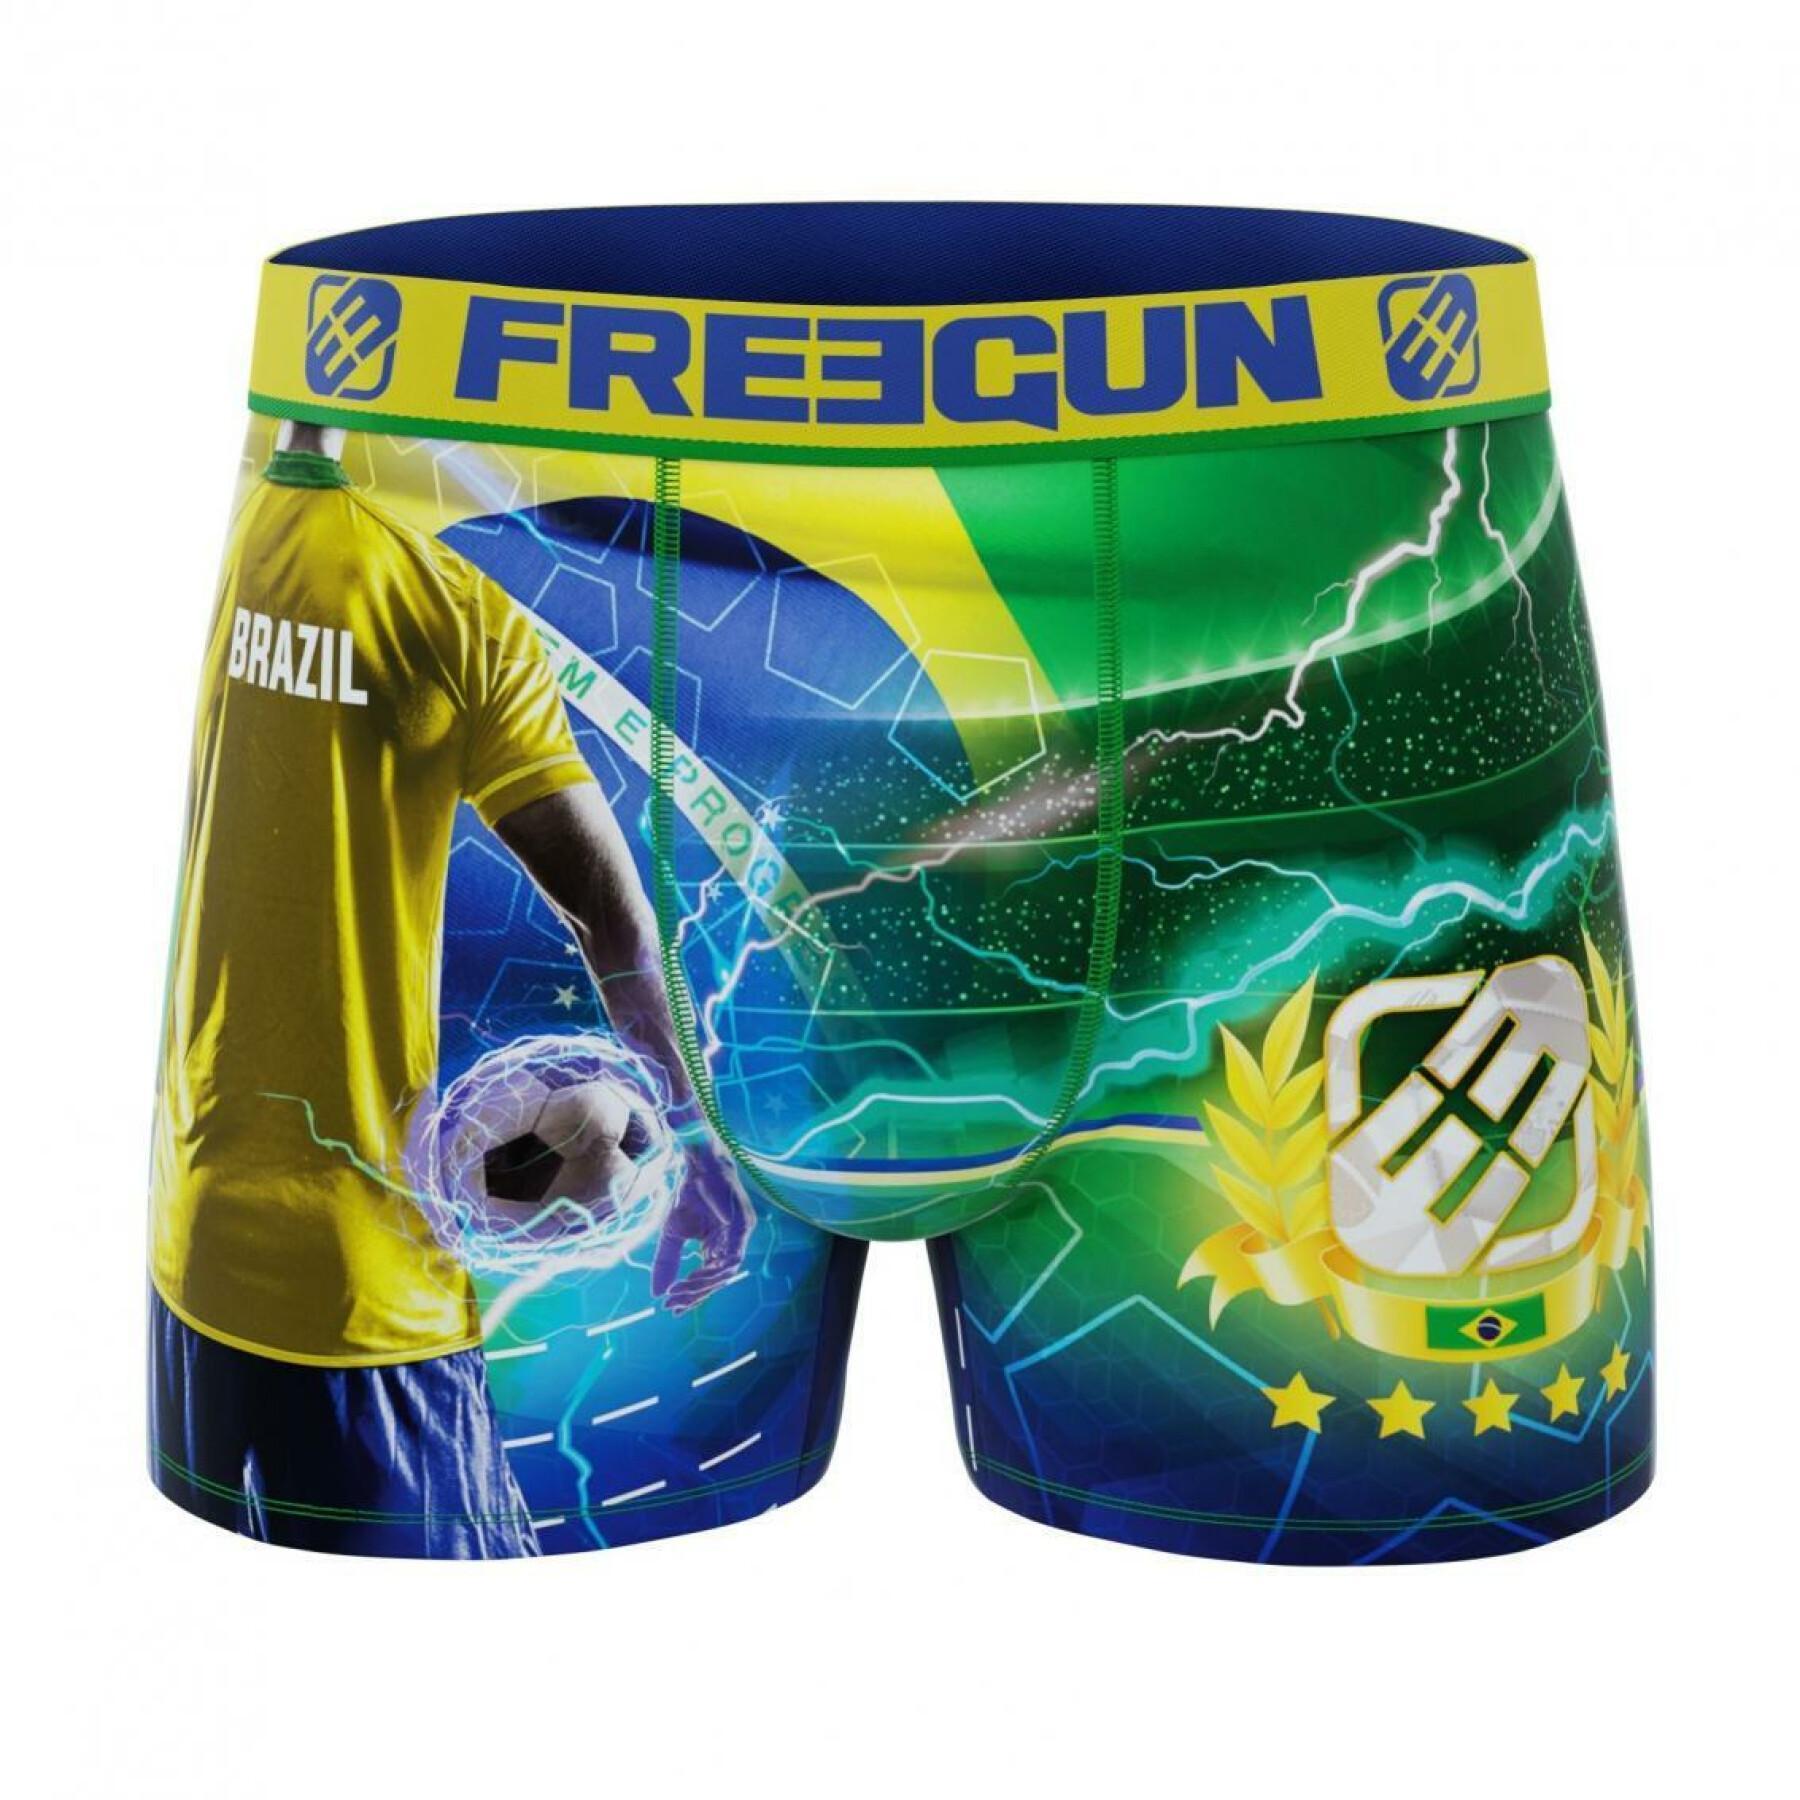 Children's boxer shorts Freegun Coupe du Monde Brazil